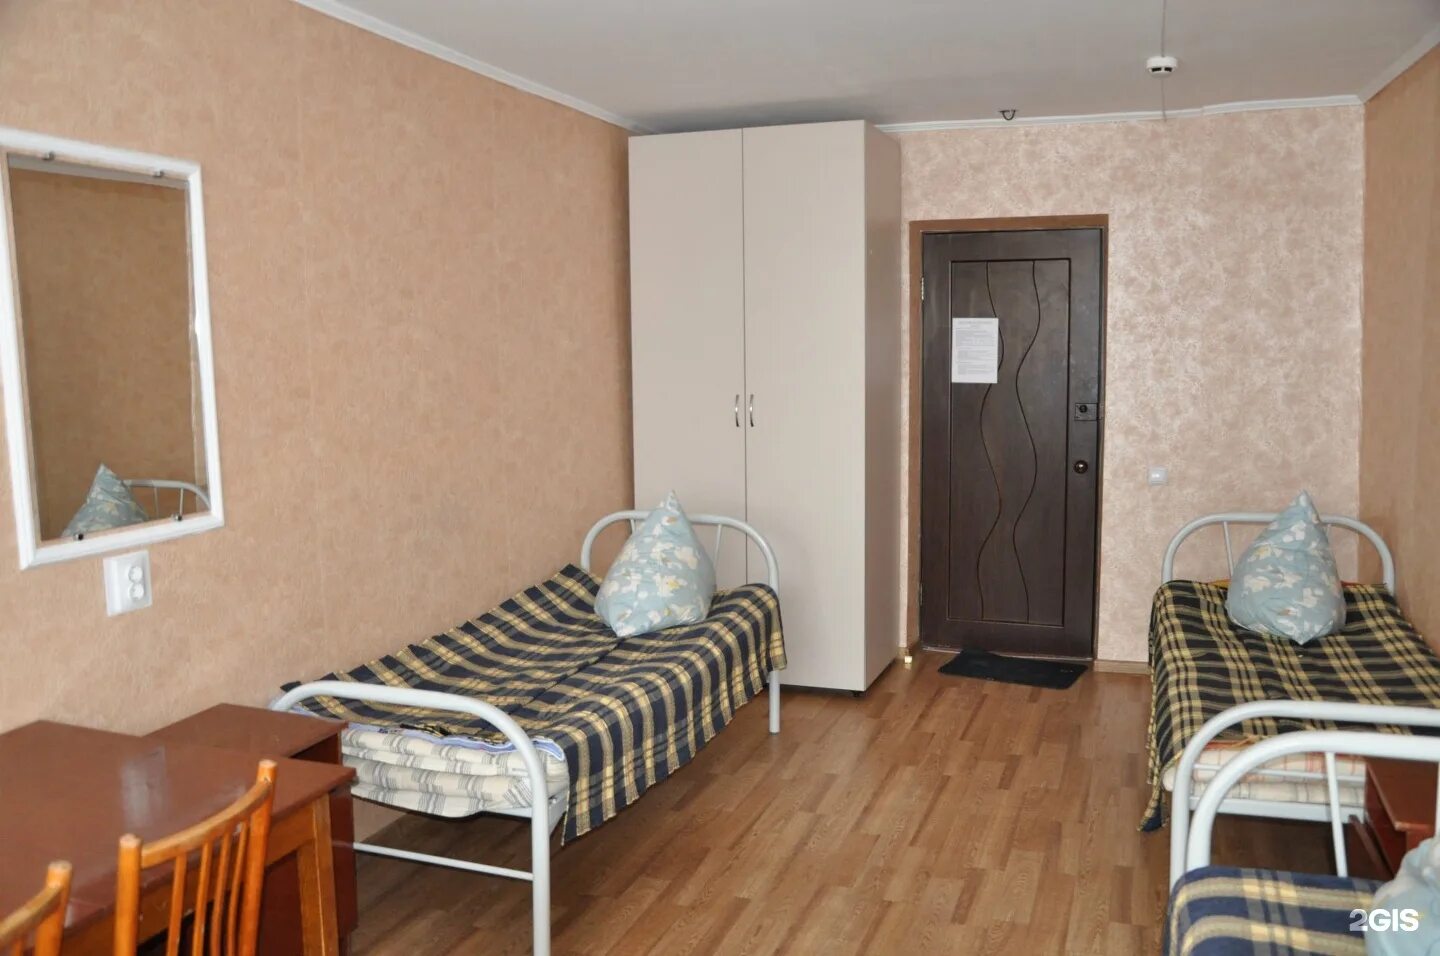 Общежитие 4 СИБУПК Новосибирск. Общага гостиничного типа. Комната в общежитии гостиничного типа. Блочная комната в общежитии.